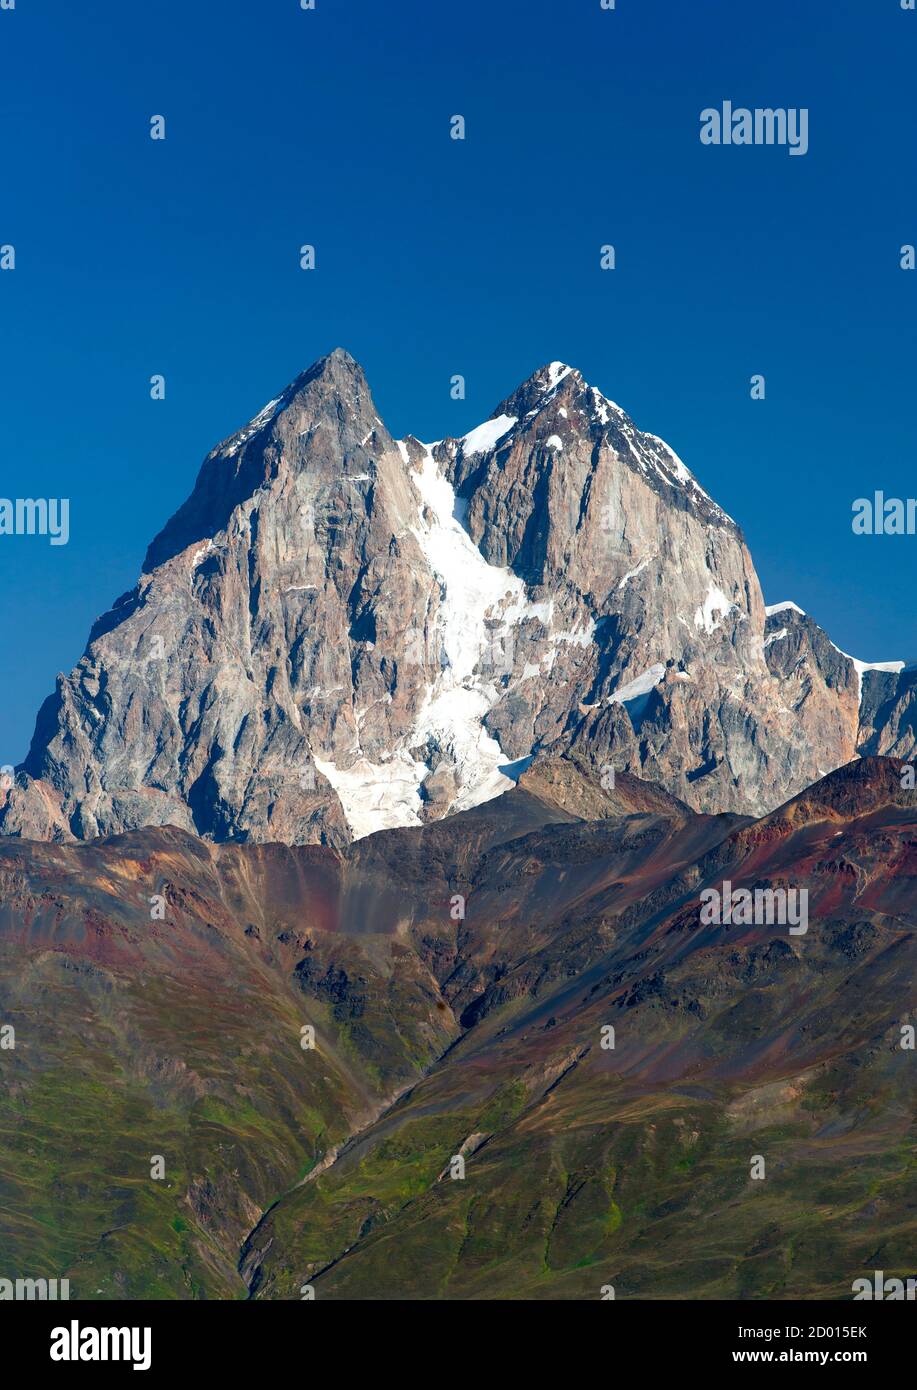 The twin peaks of Mount Ushba (4710m) in the Svaneti region of the Caucasus Mountains in northwestern Georgia. Stock Photo